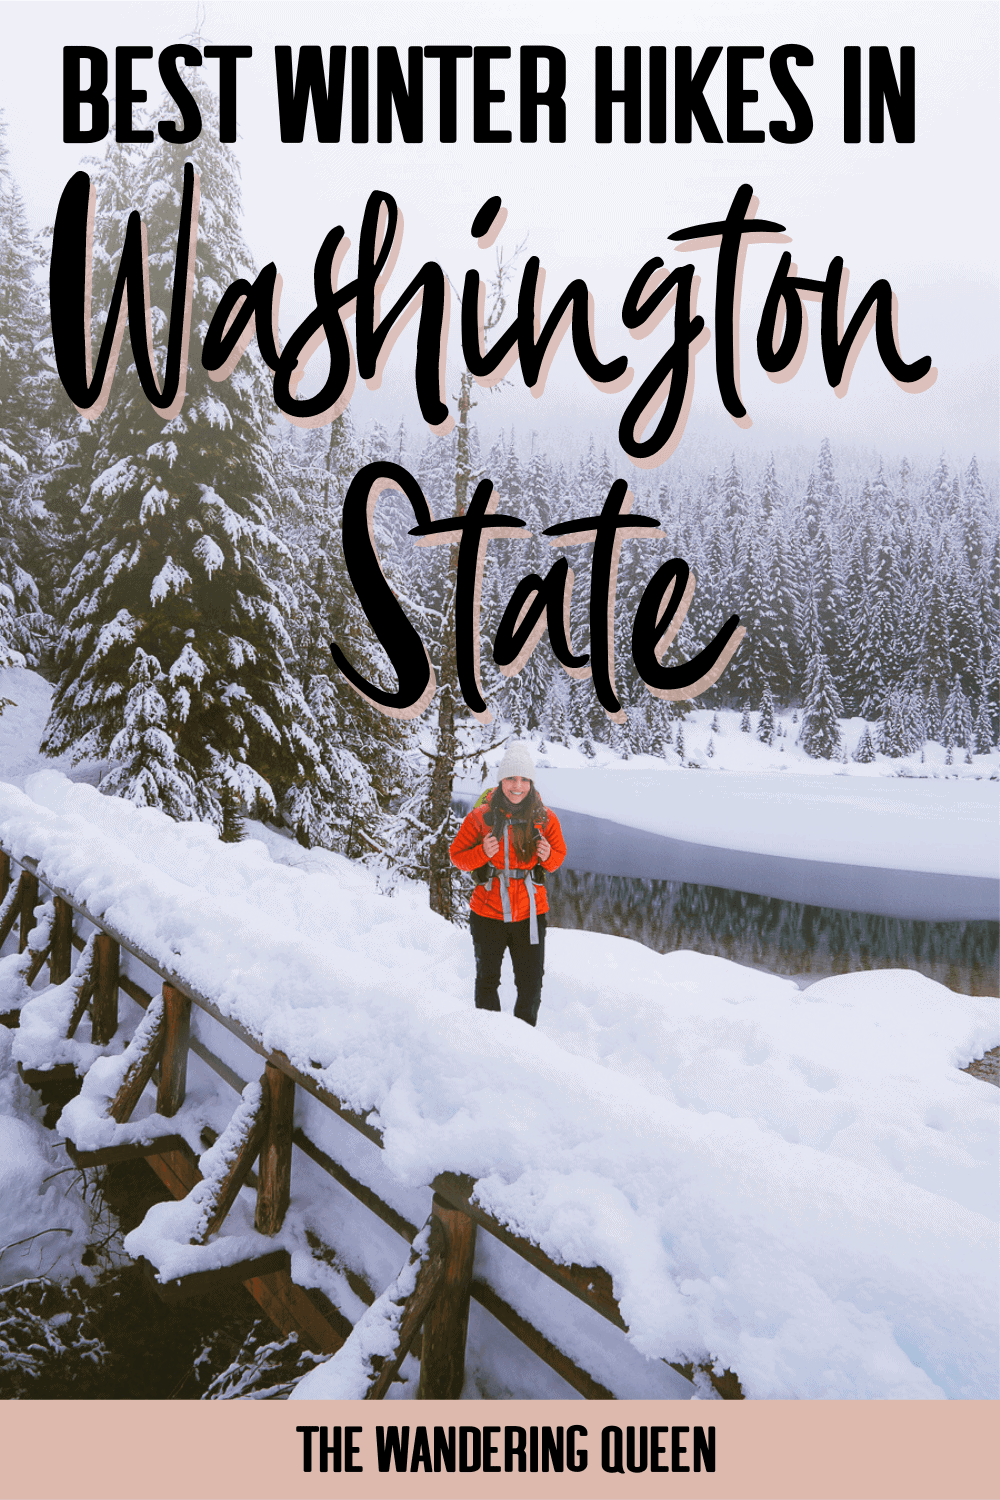 The Best Washington Winter Hikes